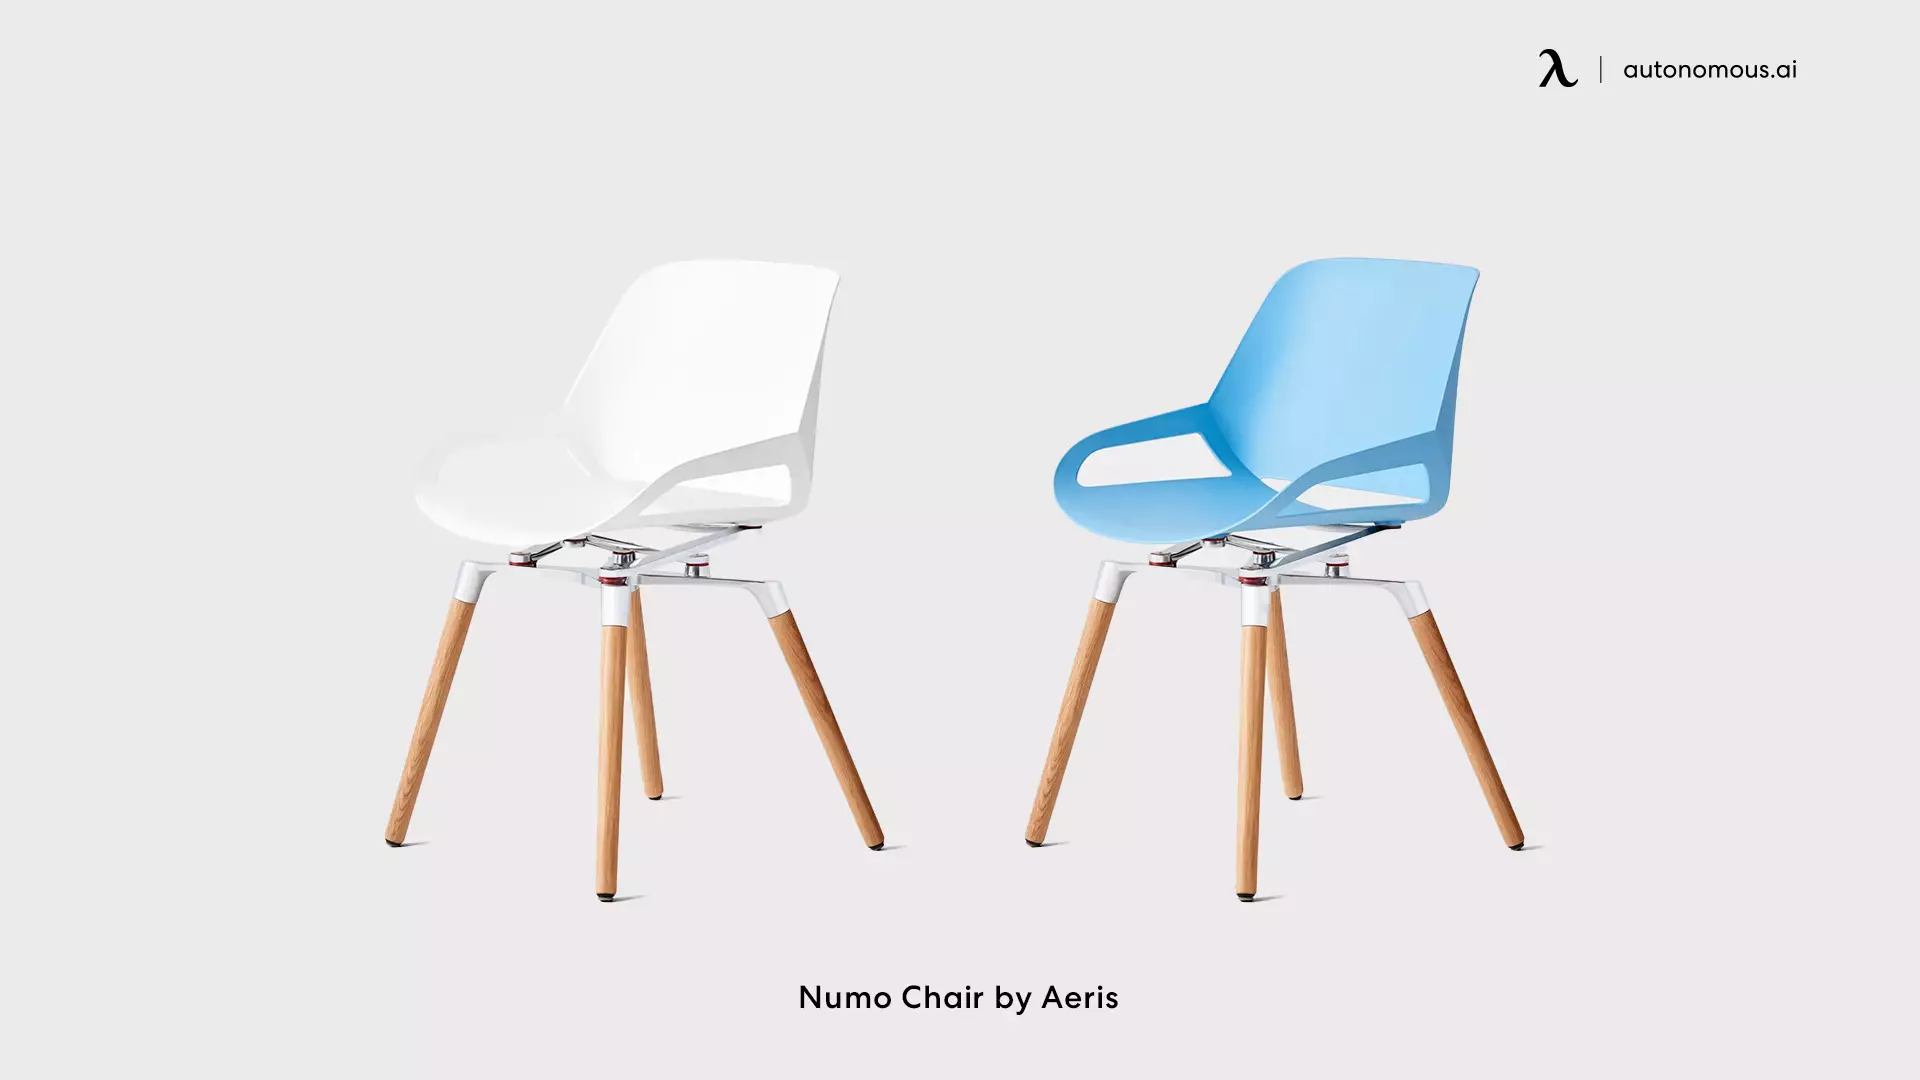 Numo Chair by Aeris